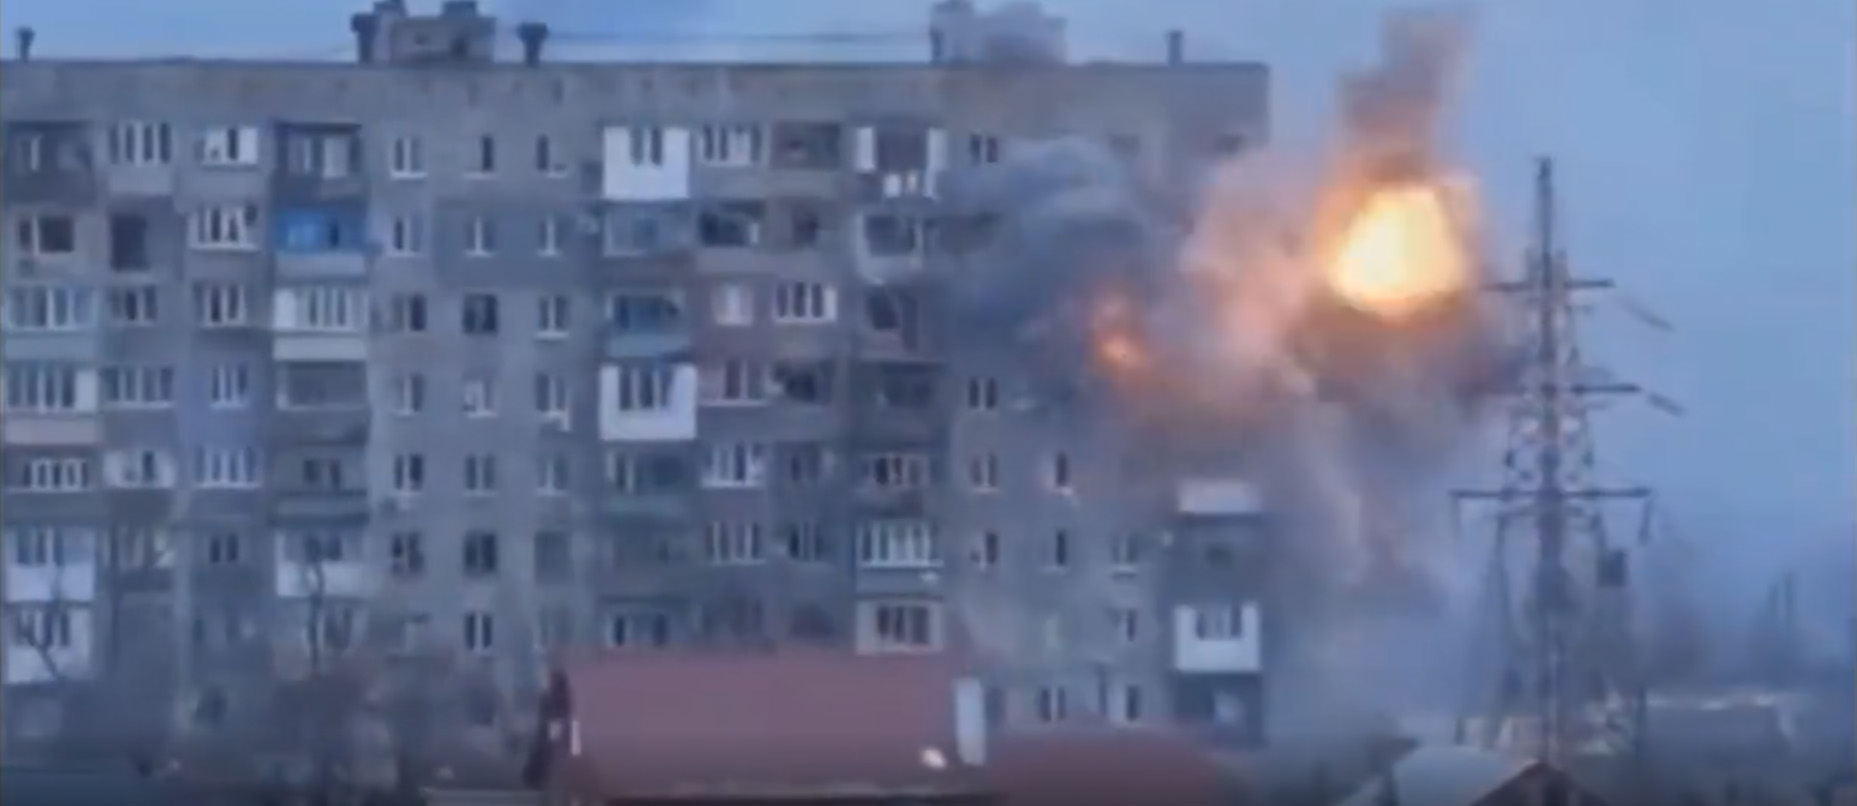 Impactante video de la guerra en Ucrania